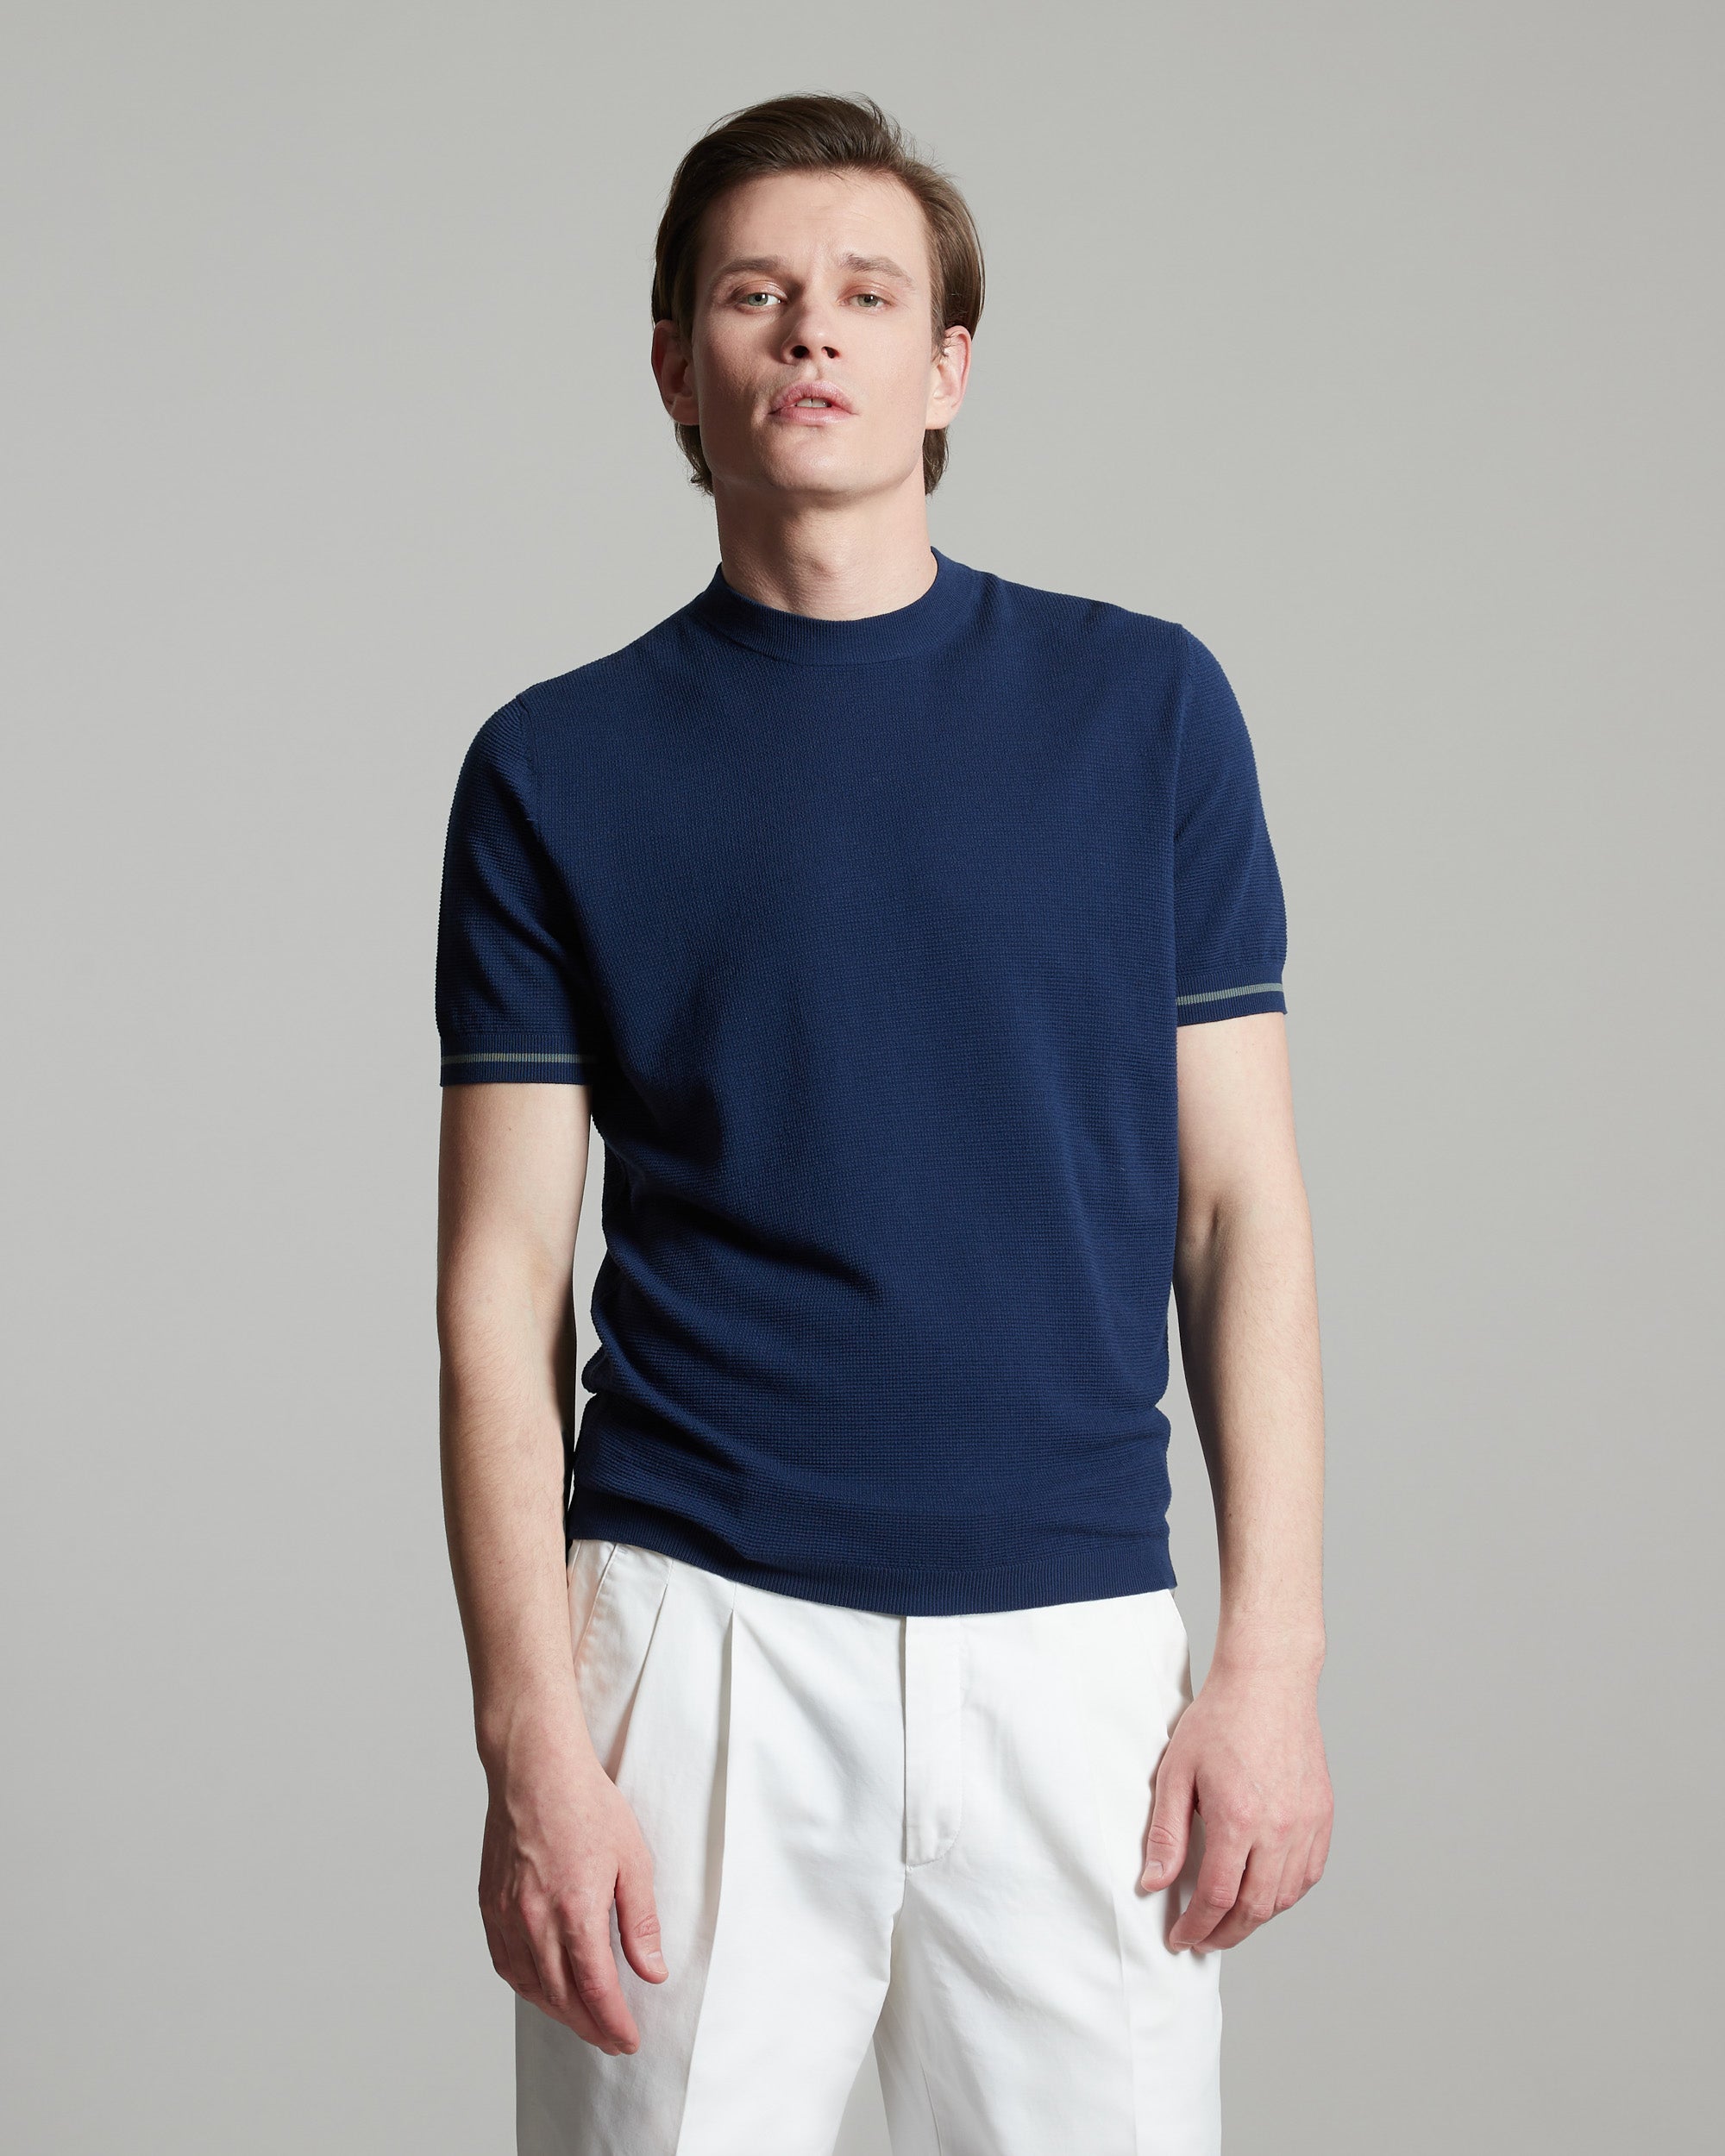 12.8 Kid Wool blue T-shirt sweater